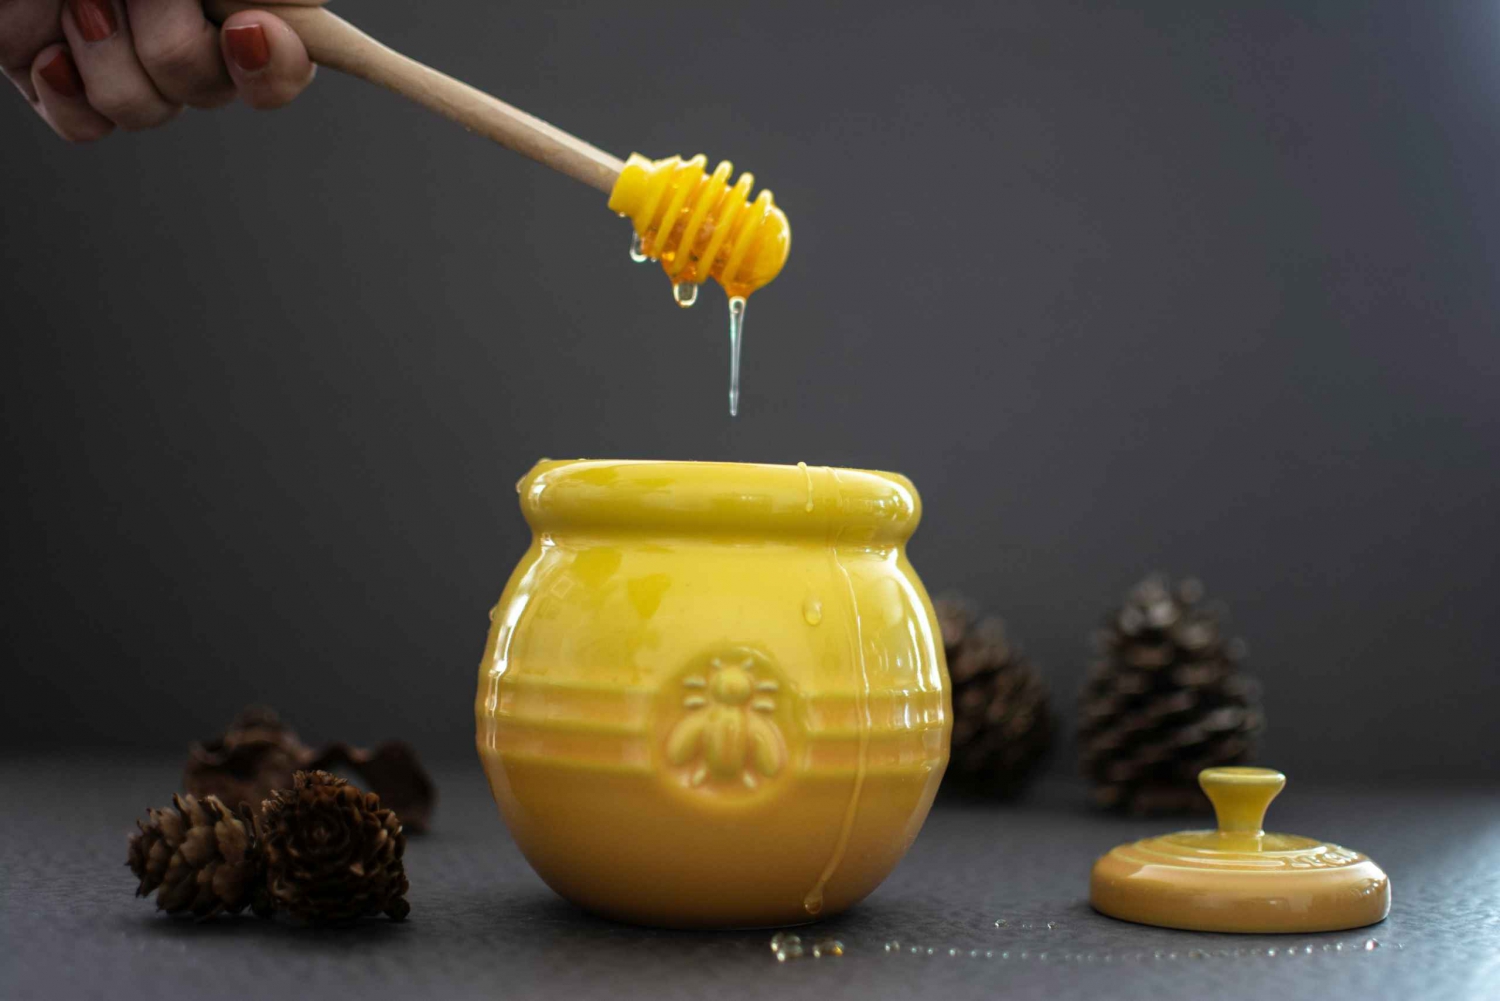 Athens: Greek Honey Tasting at Brettos in Plaka